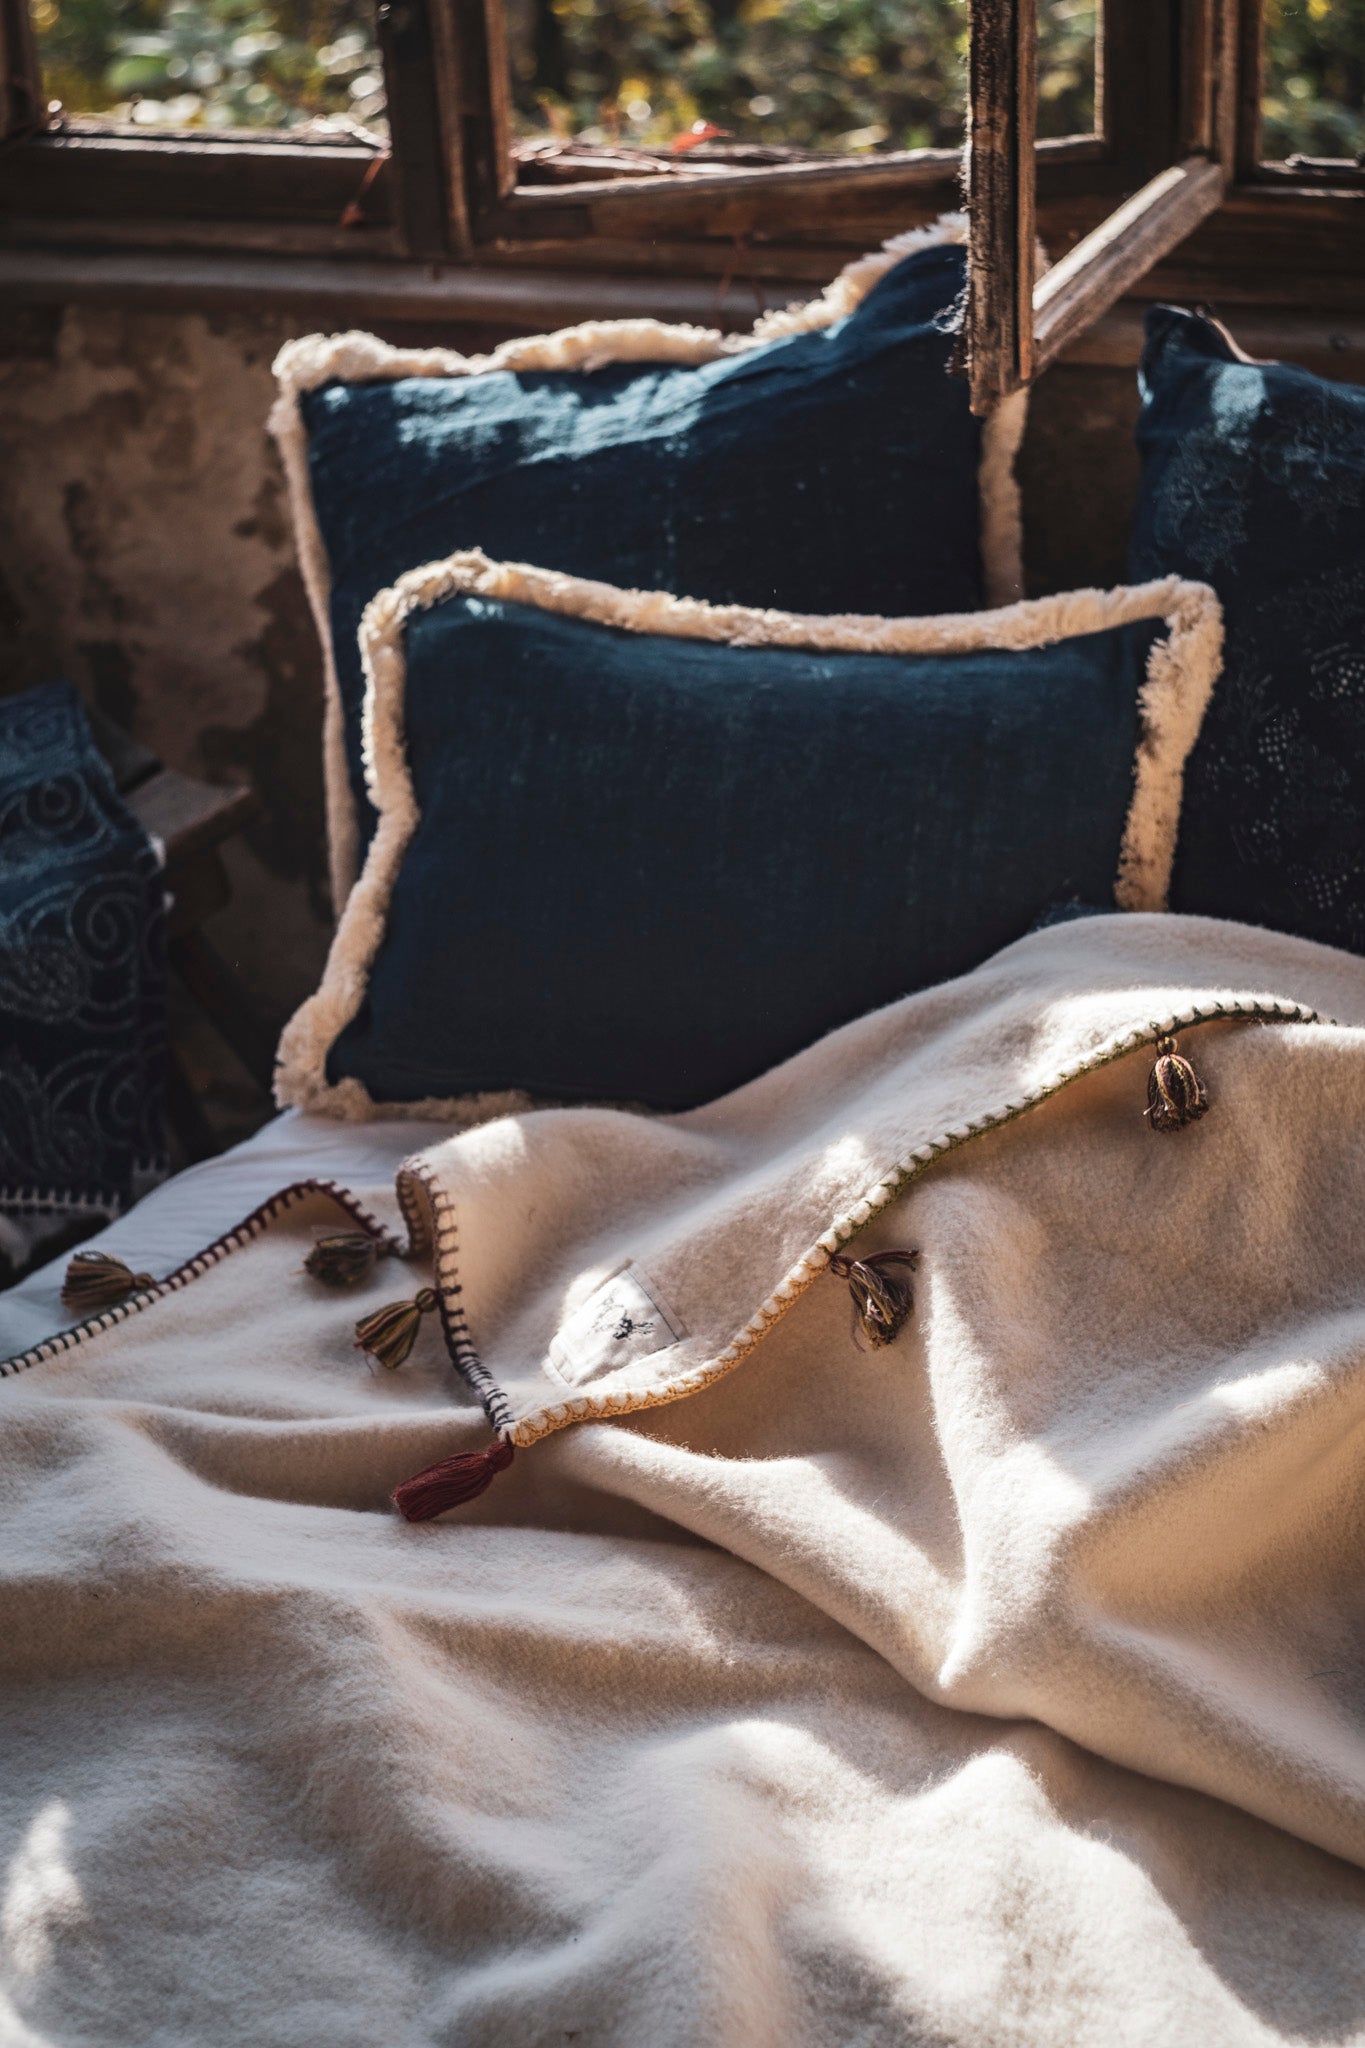 Pillow: Indigo over dyed antique handwoven hemp - P234